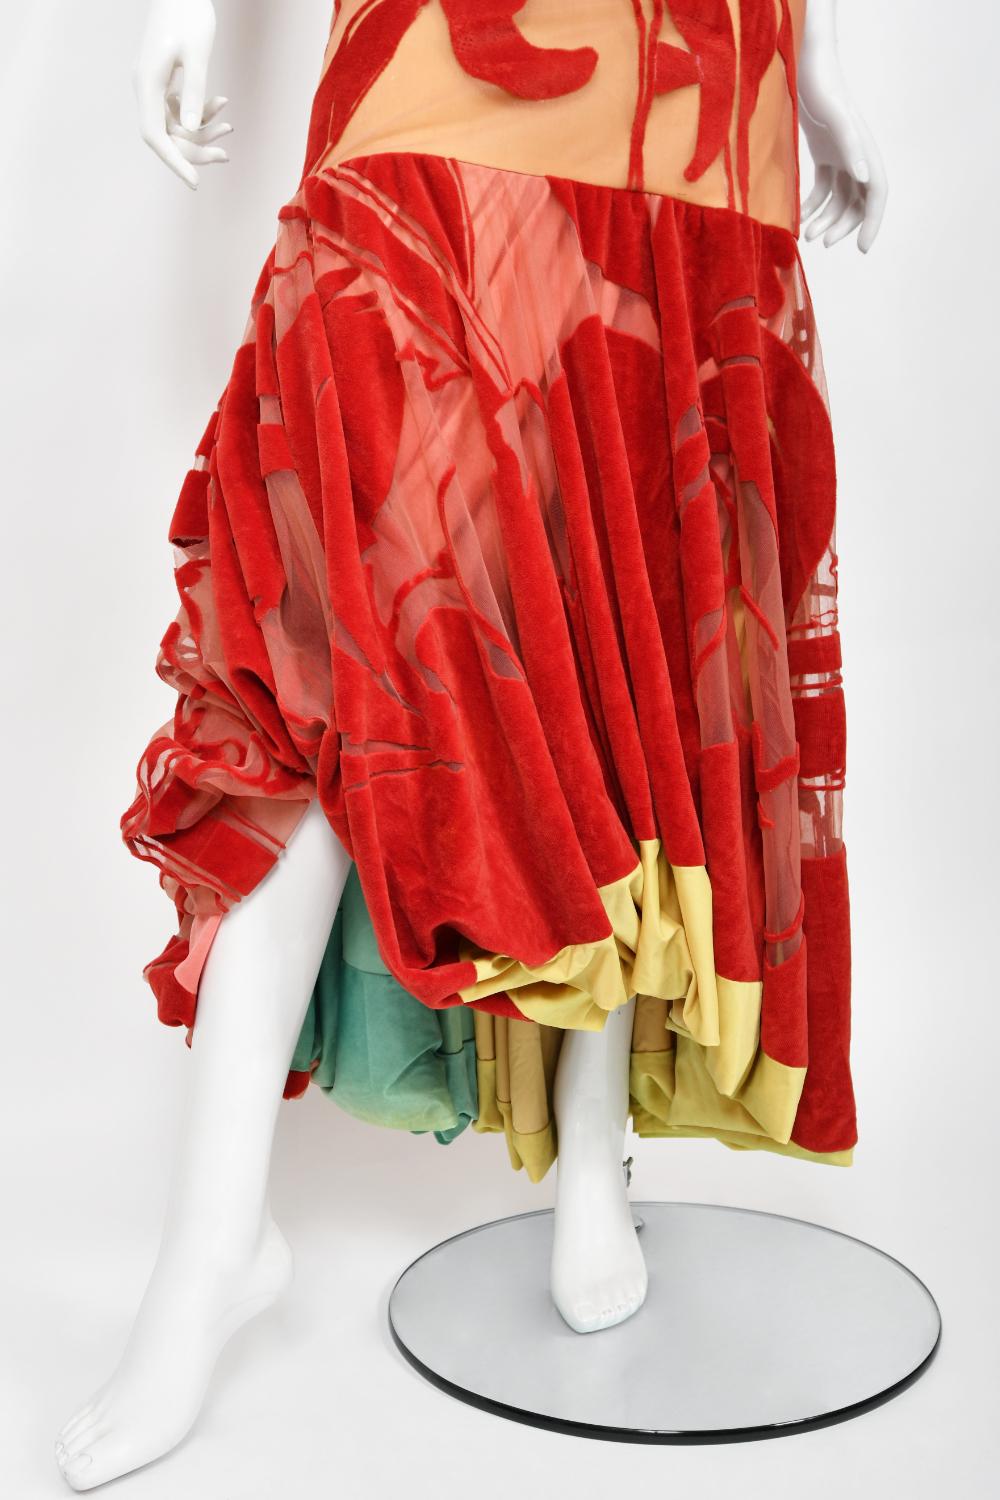 Women's 1991 John Galliano Documented Runway Red Flocked Velvet Asymmetric Bias-Cut Gown For Sale